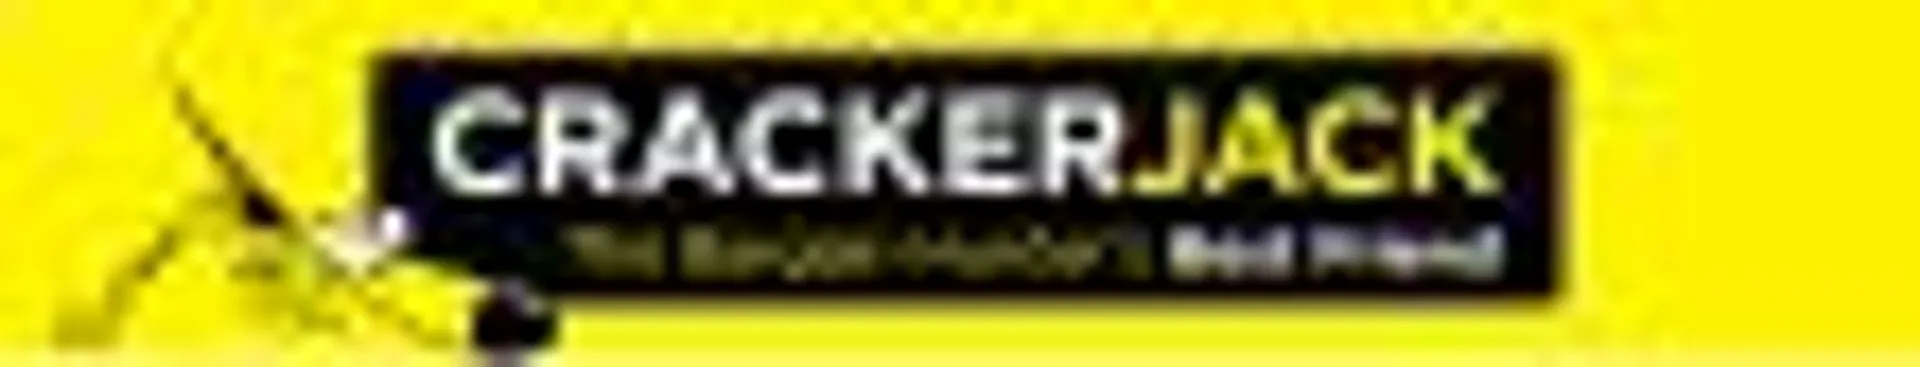 CRACKERJACK logo current weekly ad